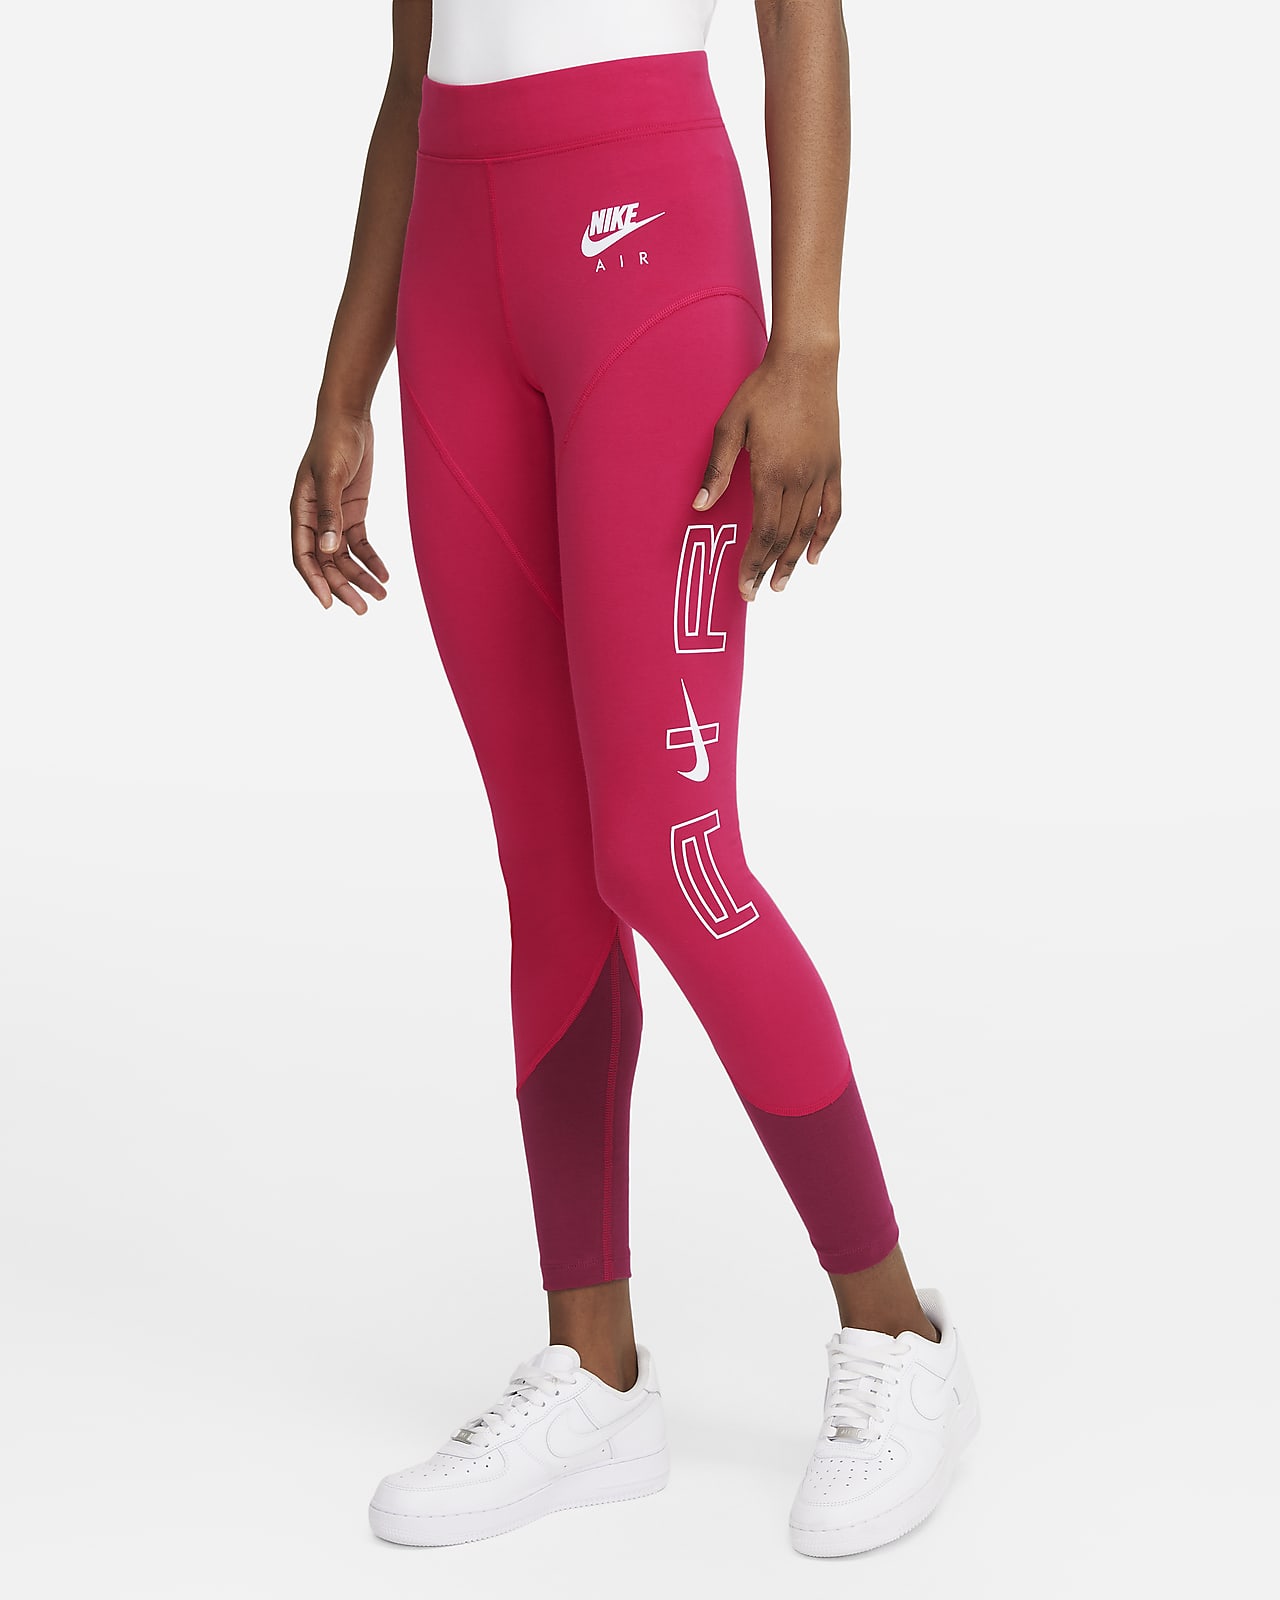 Vernietigen Belichamen Verwoesting Nike Air Women's High-Waisted Graphic Leggings. Nike.com